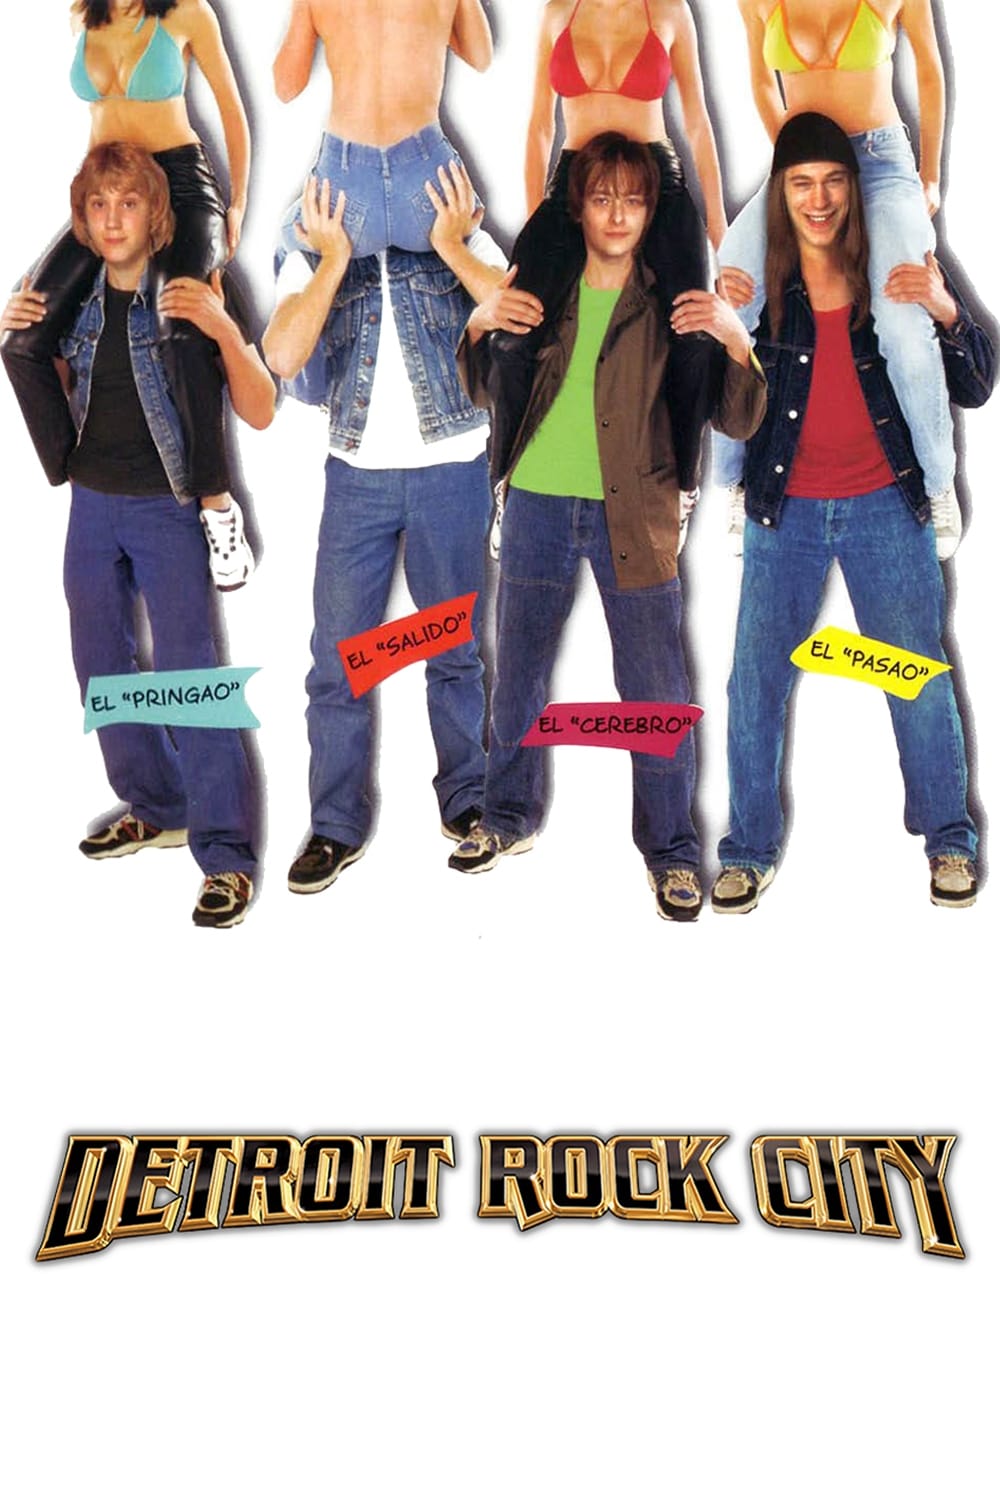 Detroit Rock City - Filme 1999 - AdoroCinema